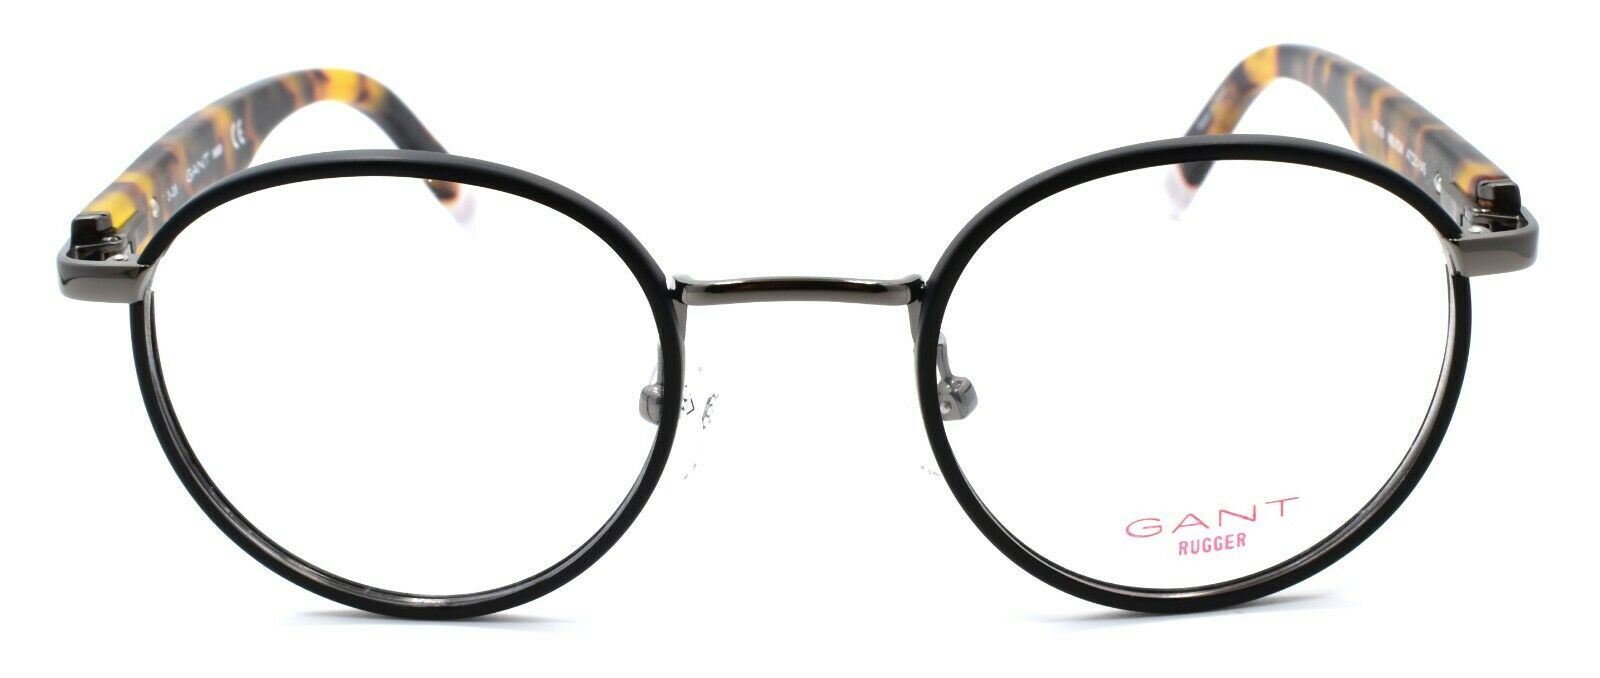 2-GANT Rugger GR105 MBLKGN Men's Eyeglasses Frames 47-21-145 Black / Gunmetal-715583794801-IKSpecs